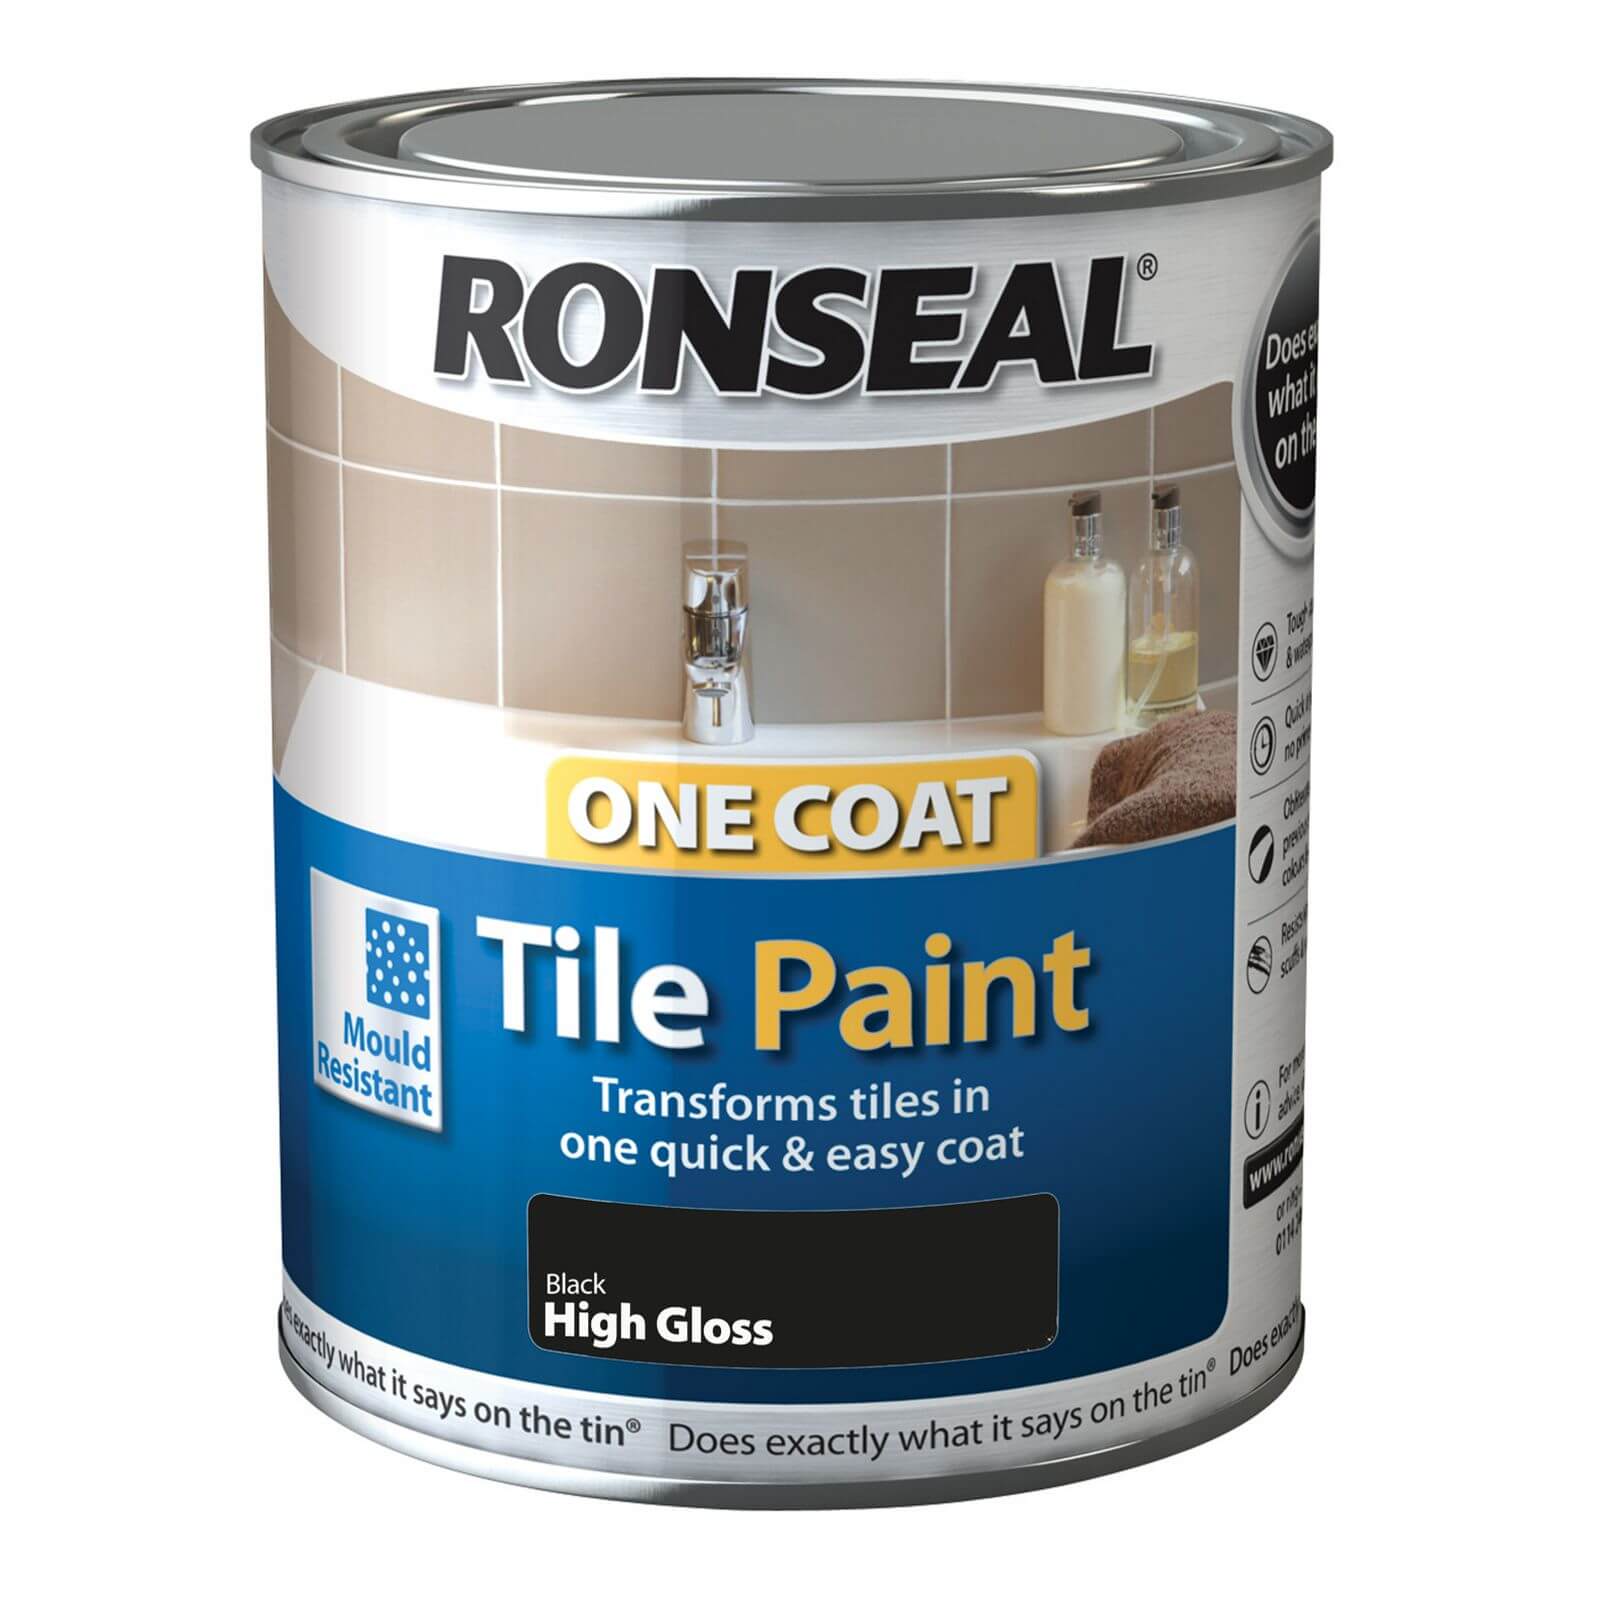 Ronseal One Coat Tile Paint Black High Gloss - 750ml